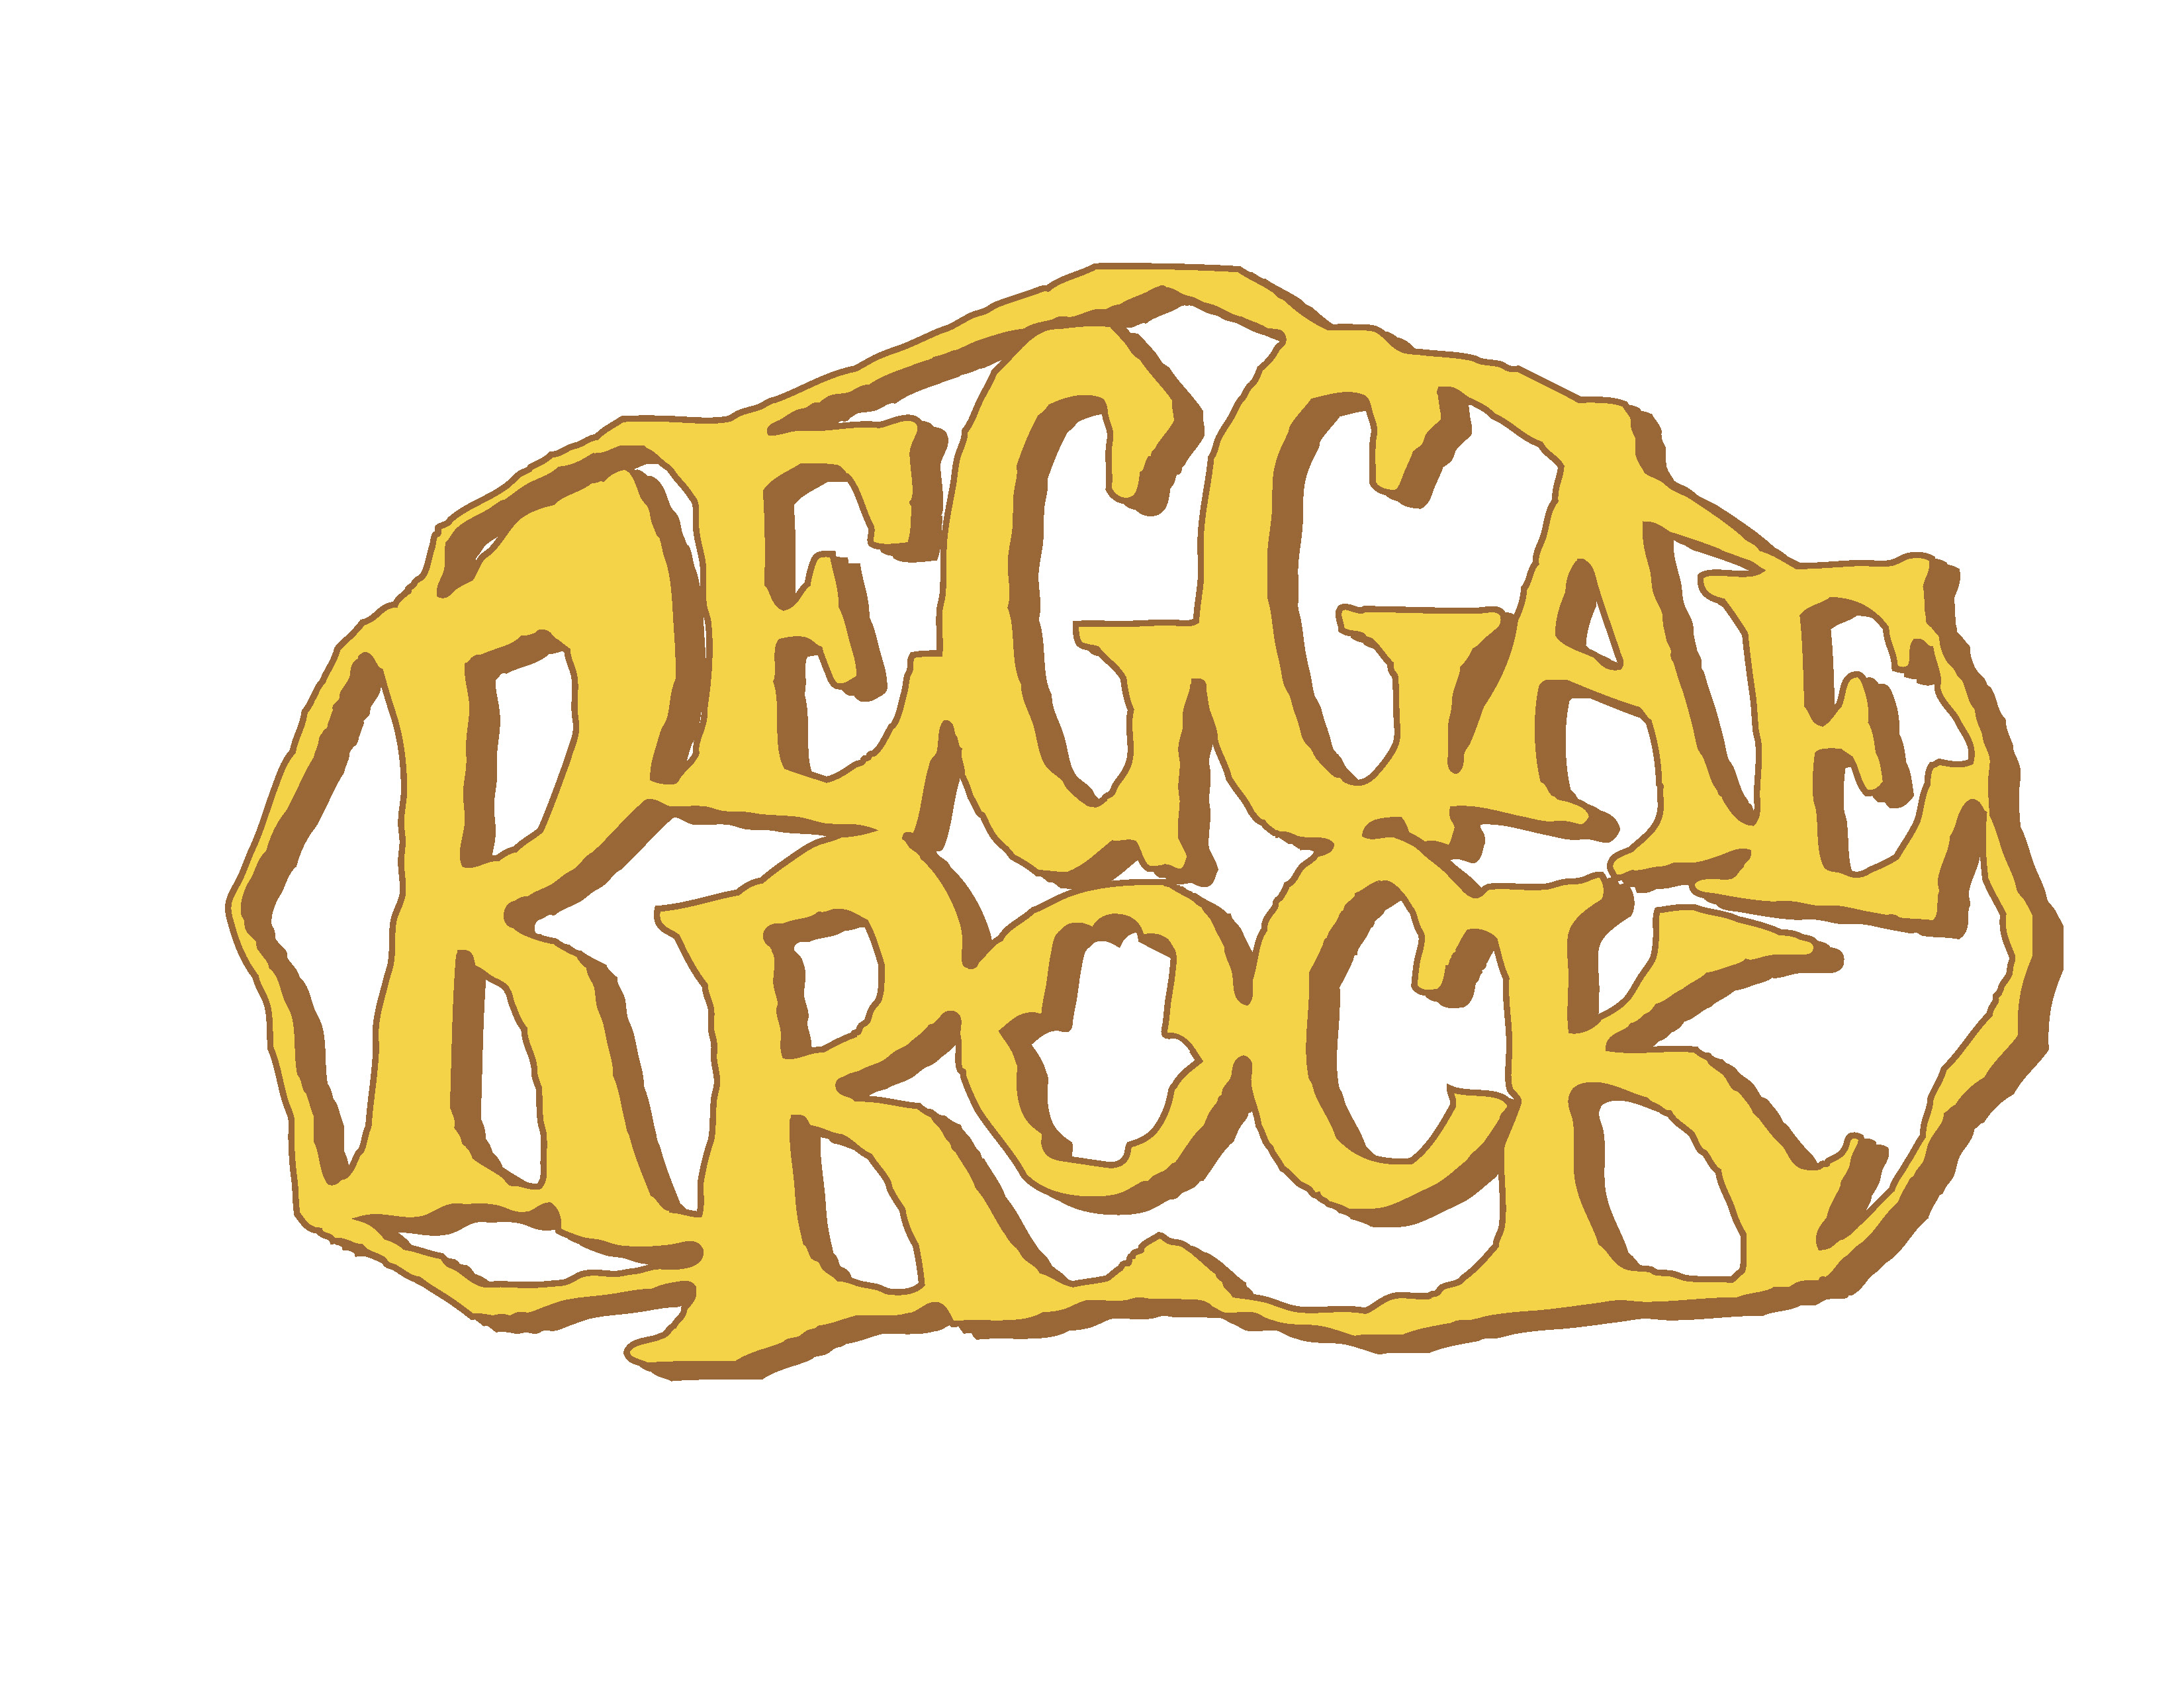 Resolvers reggae band logo